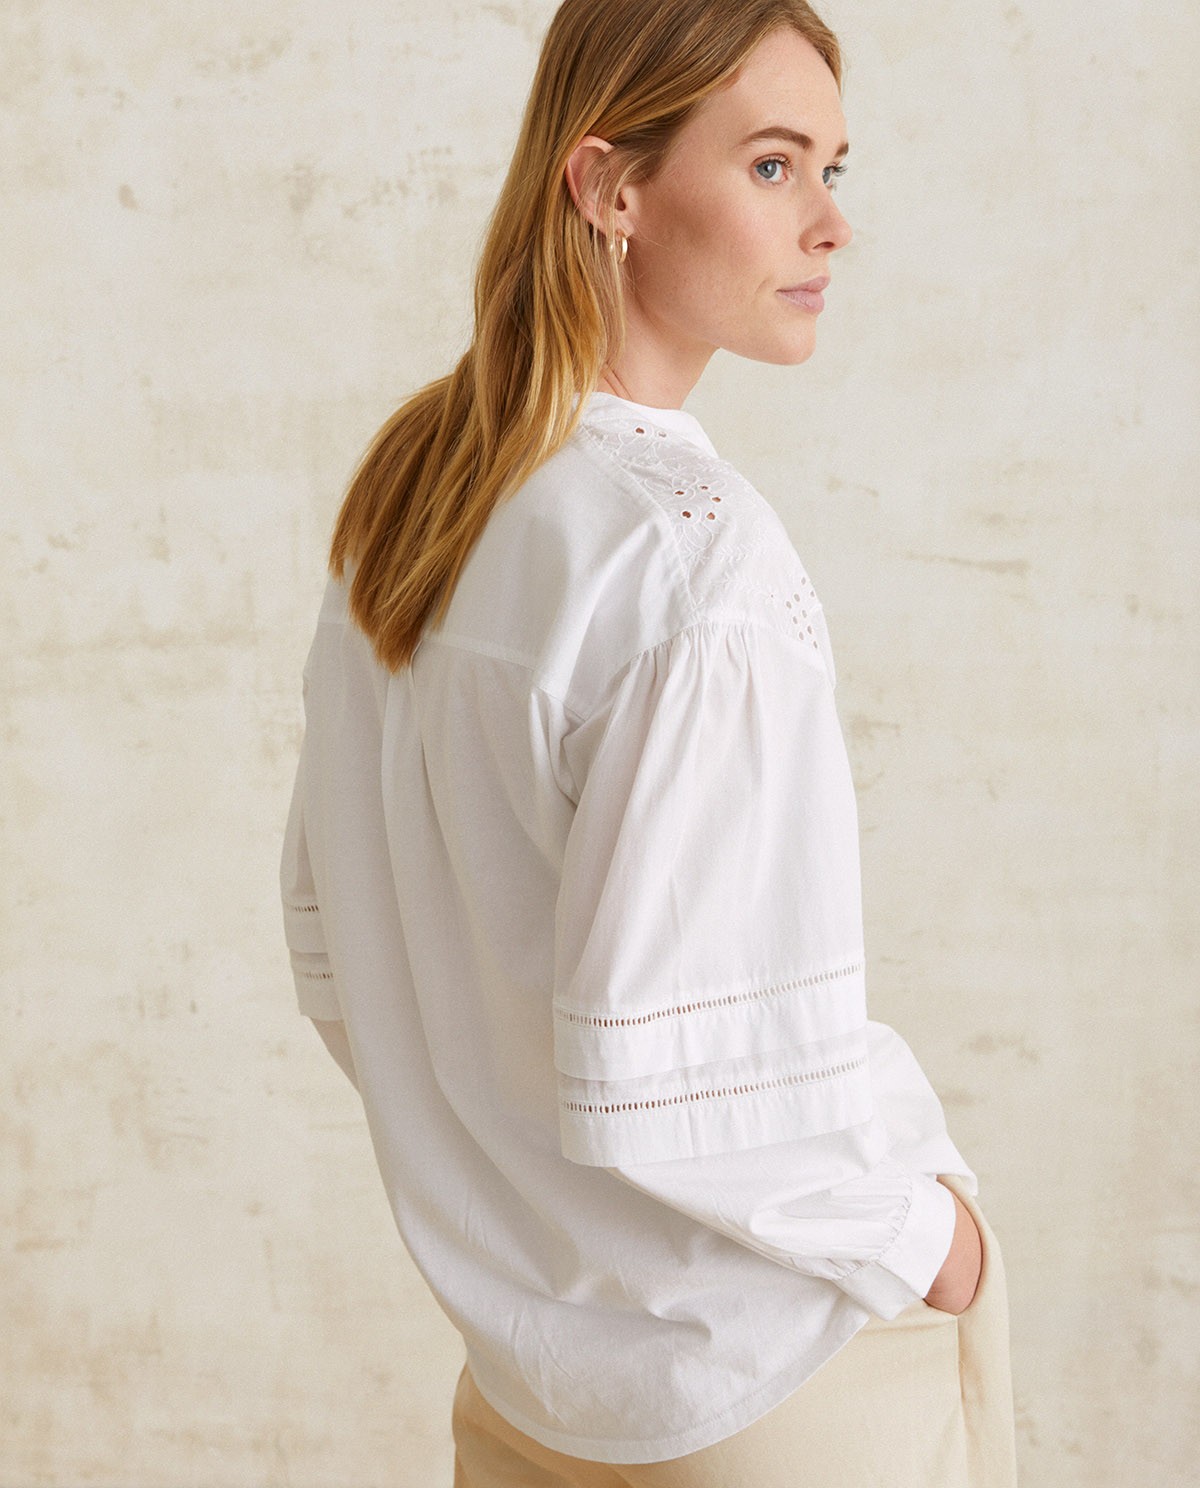 Cotton blouse embroidery White 4